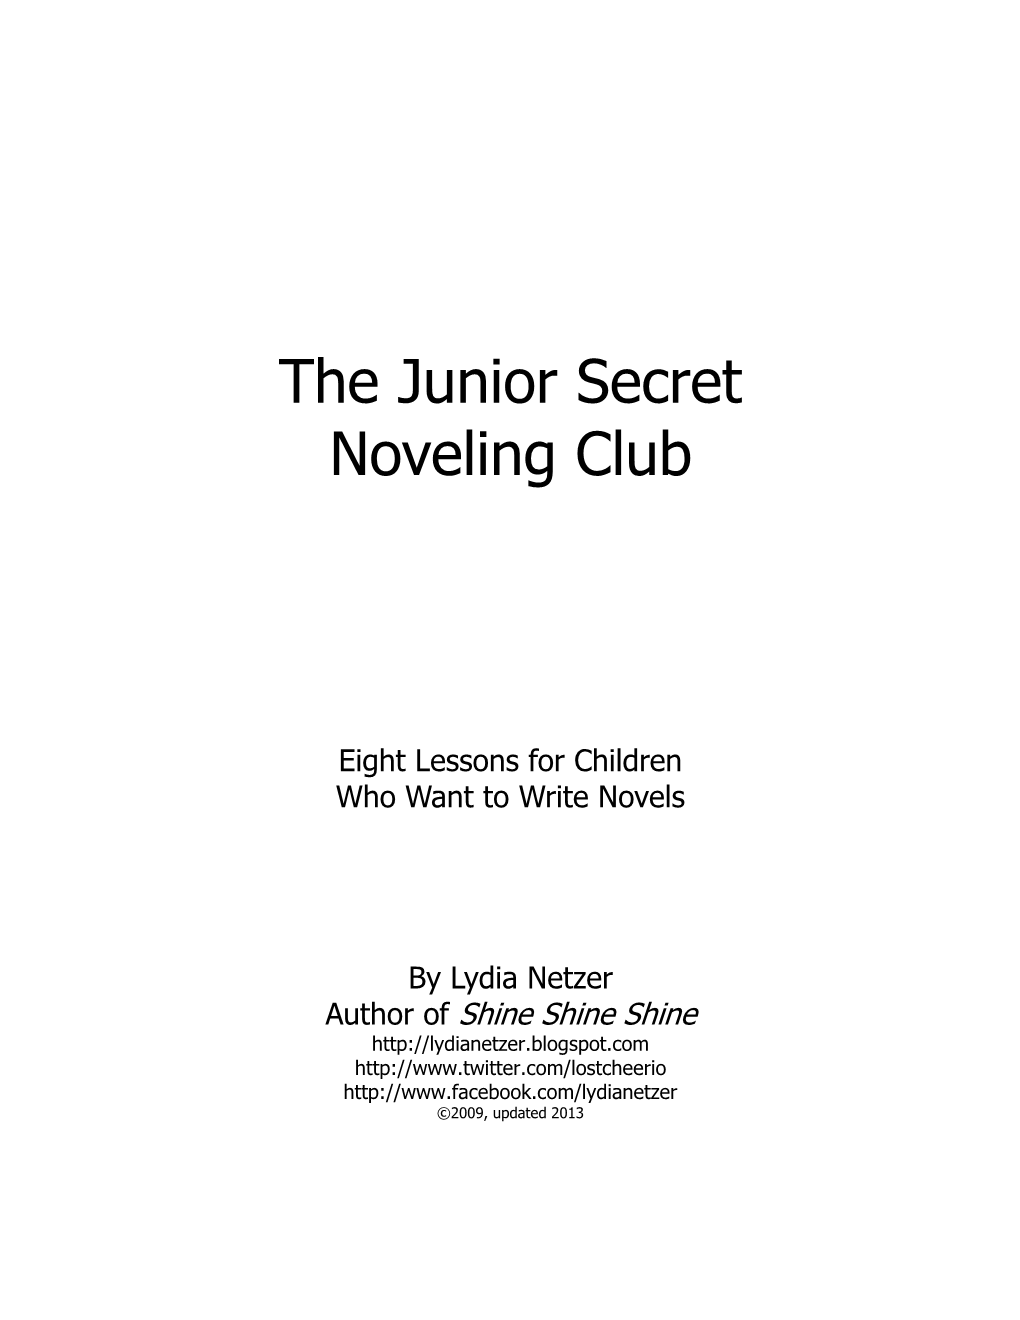 The Junior Secret Noveling Club